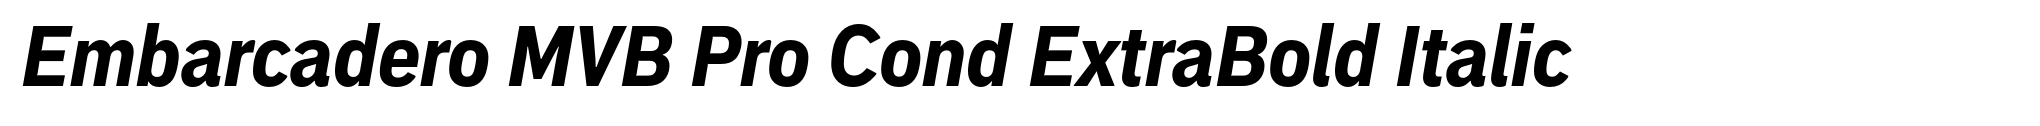 Embarcadero MVB Pro Cond ExtraBold Italic image